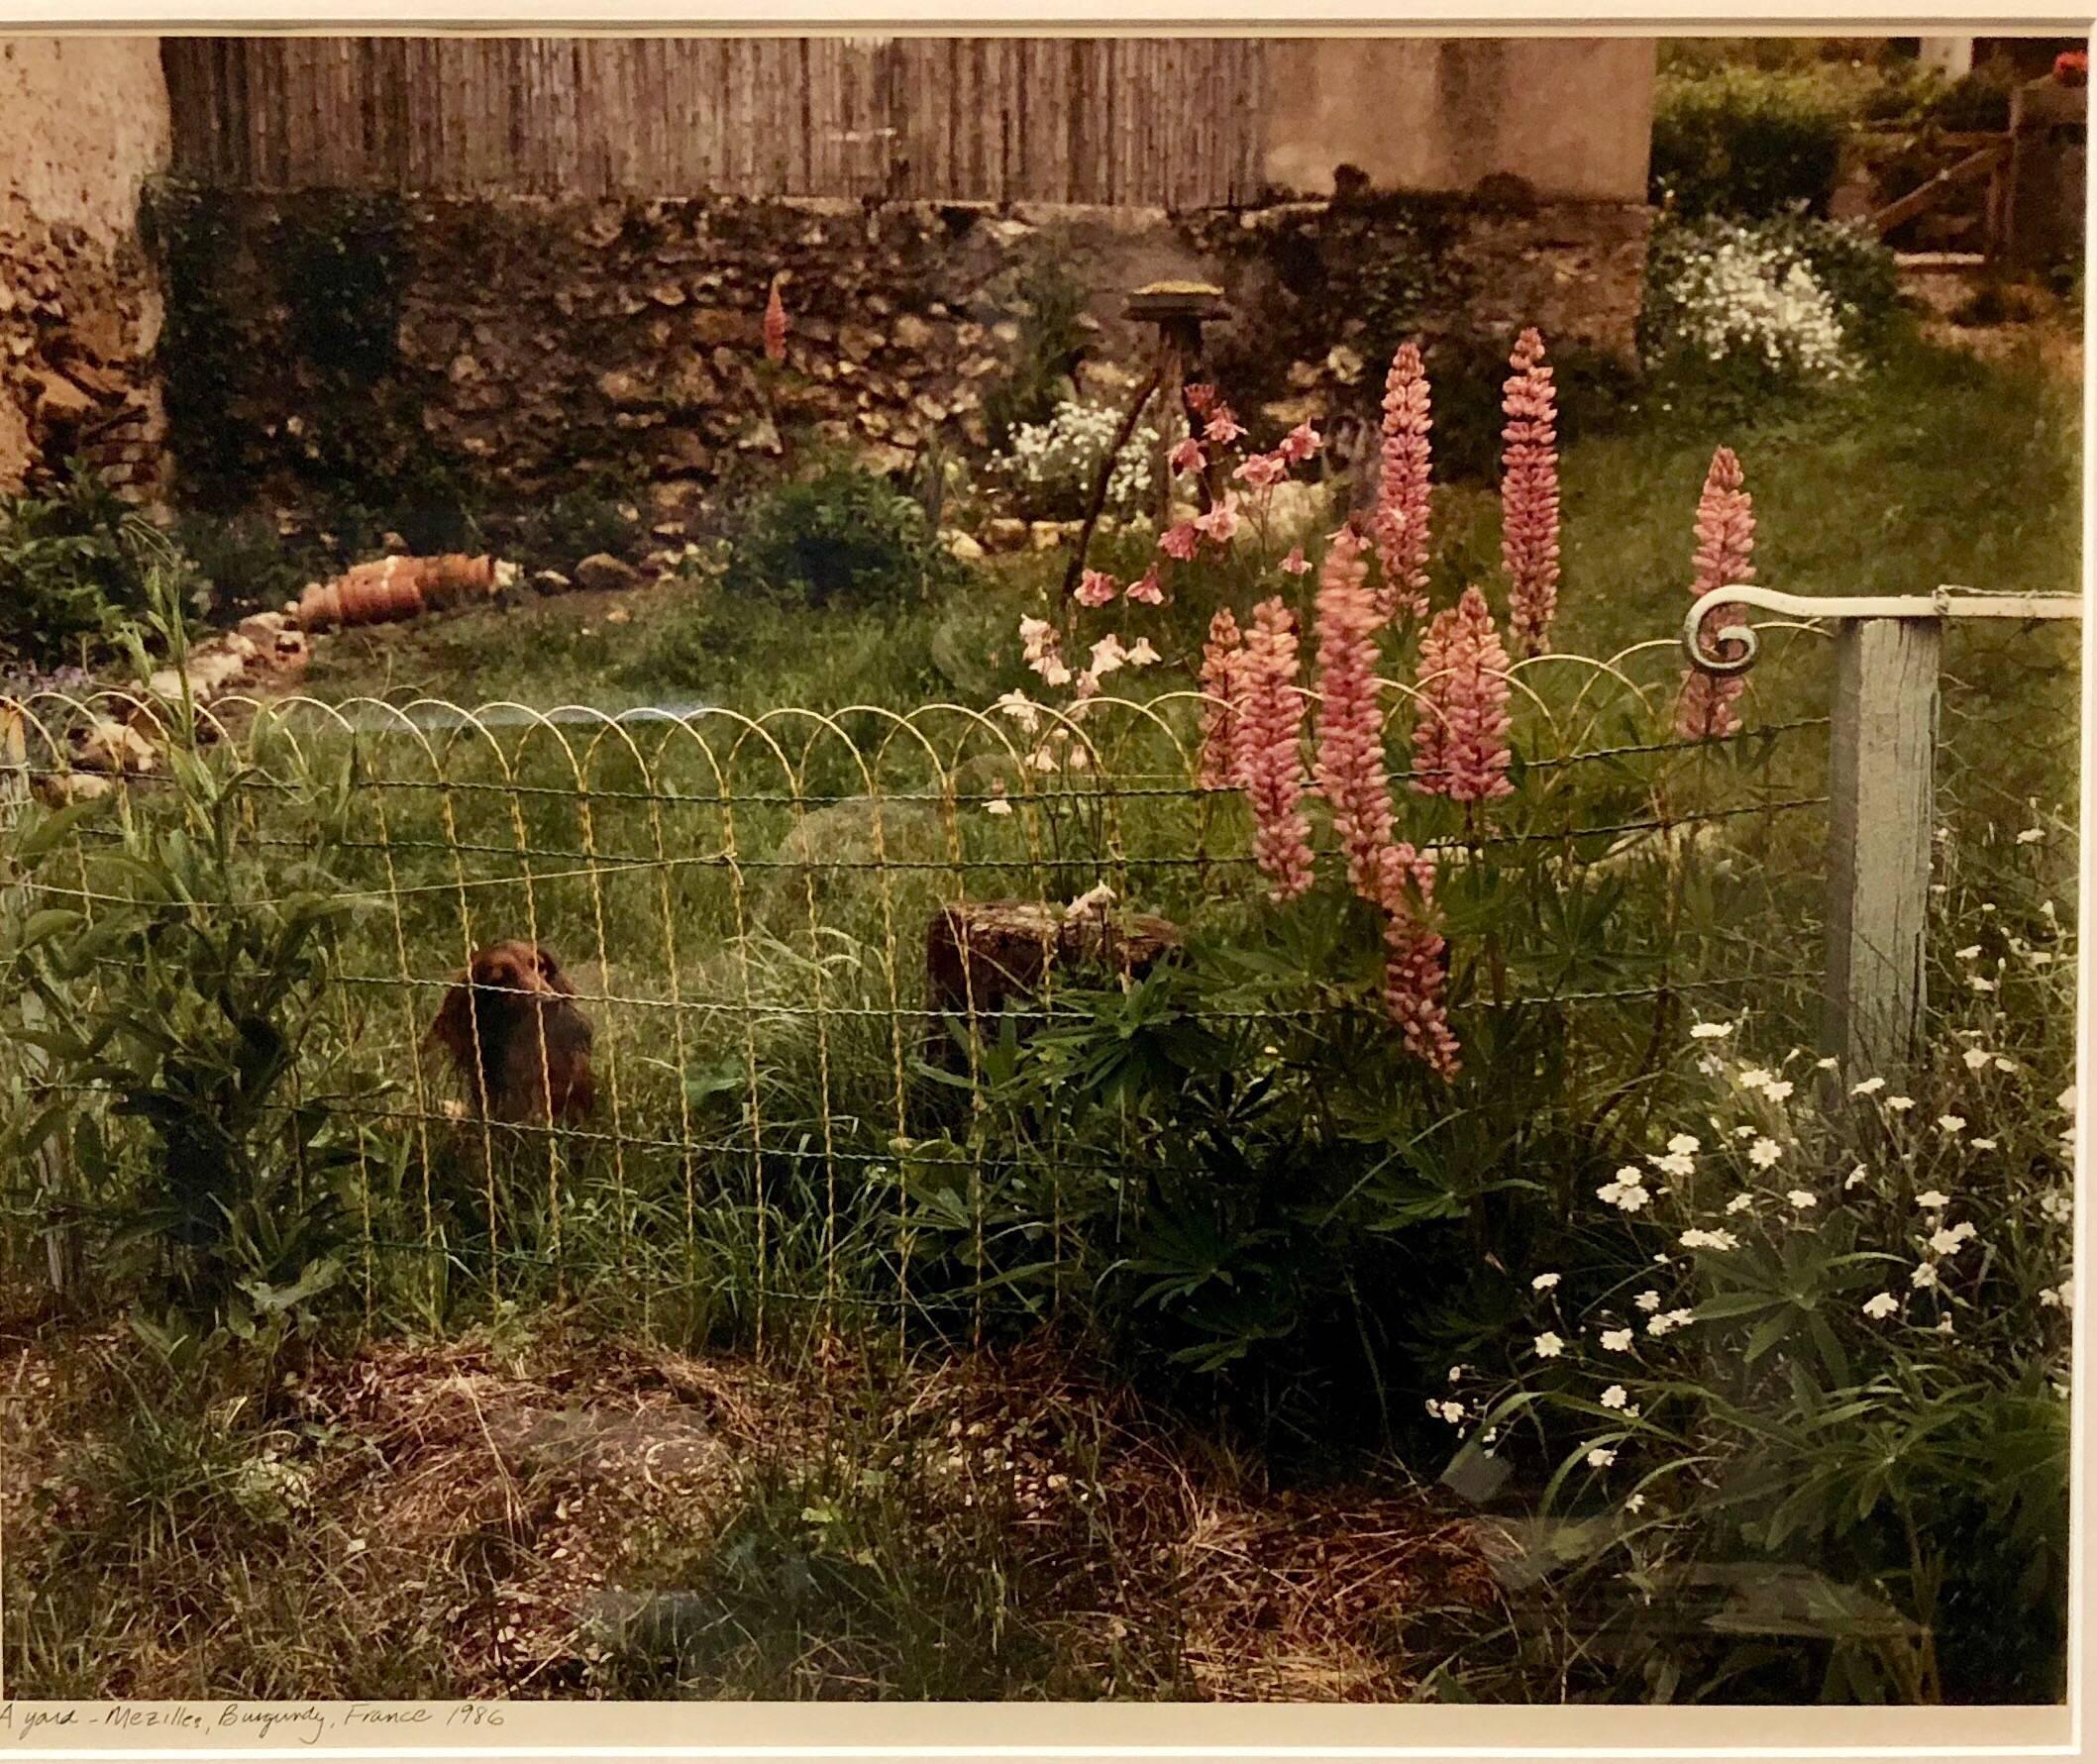 Frank Gohlke Landscape Photograph – Eine Garderobe, Mezilles Burgunder Frankreich. Field of Flowers 1986 Vintage-Farbfotografie